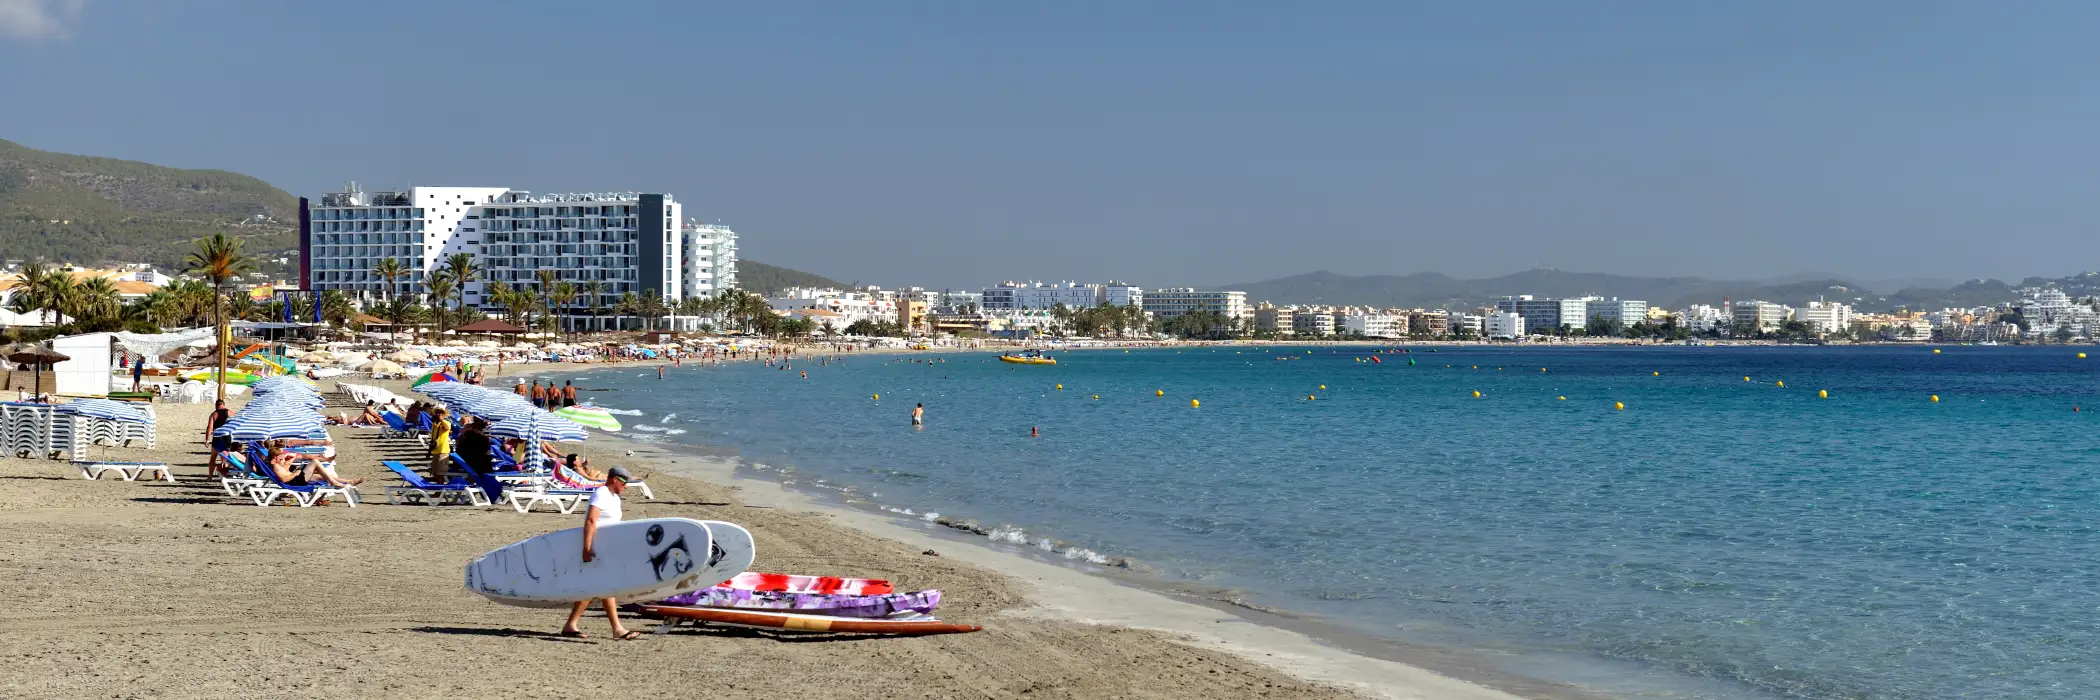 All inclusive holidays in Ibiza